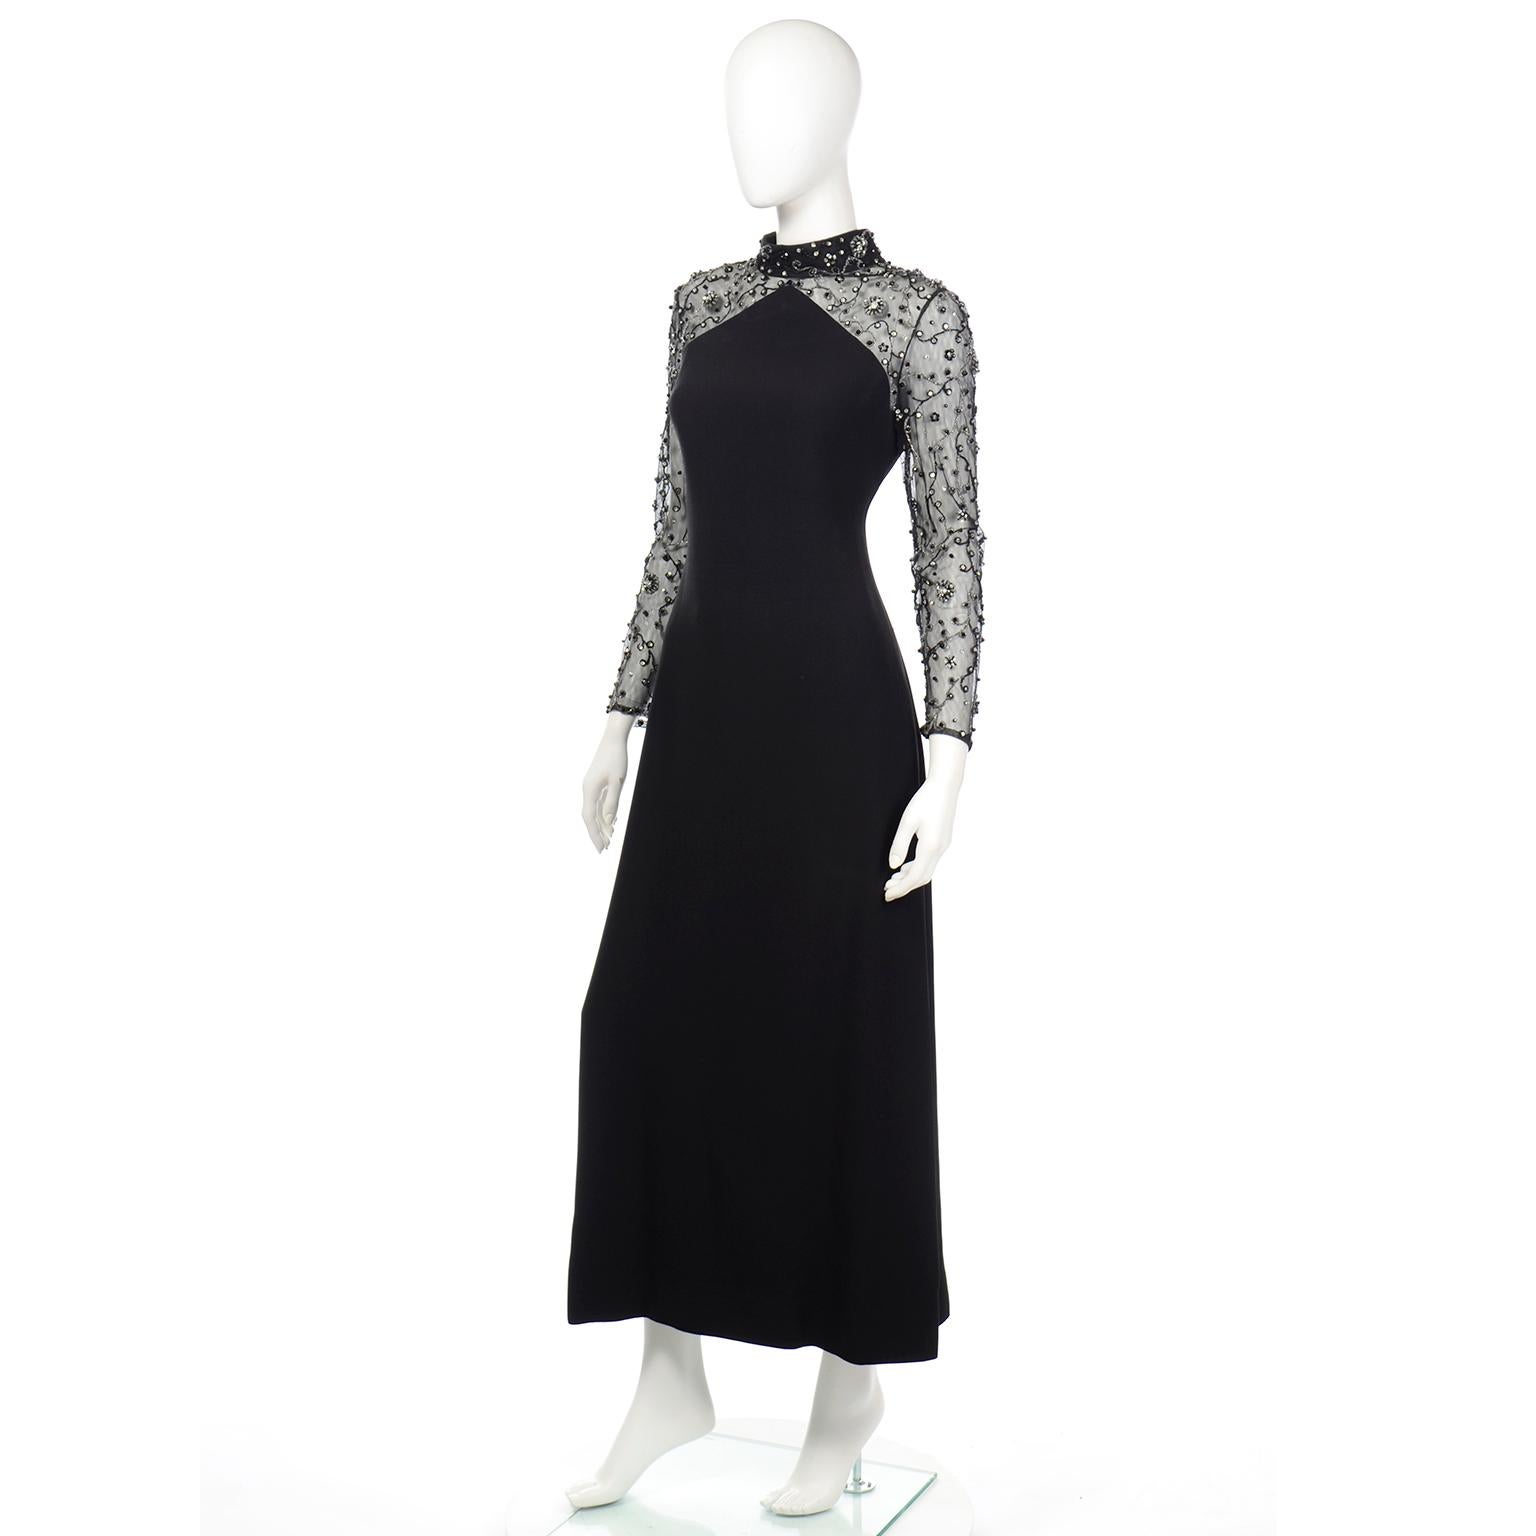 Women's Franco Bertoli Vintage Black Evening Dress with Beads Rhinestones and Embroidery